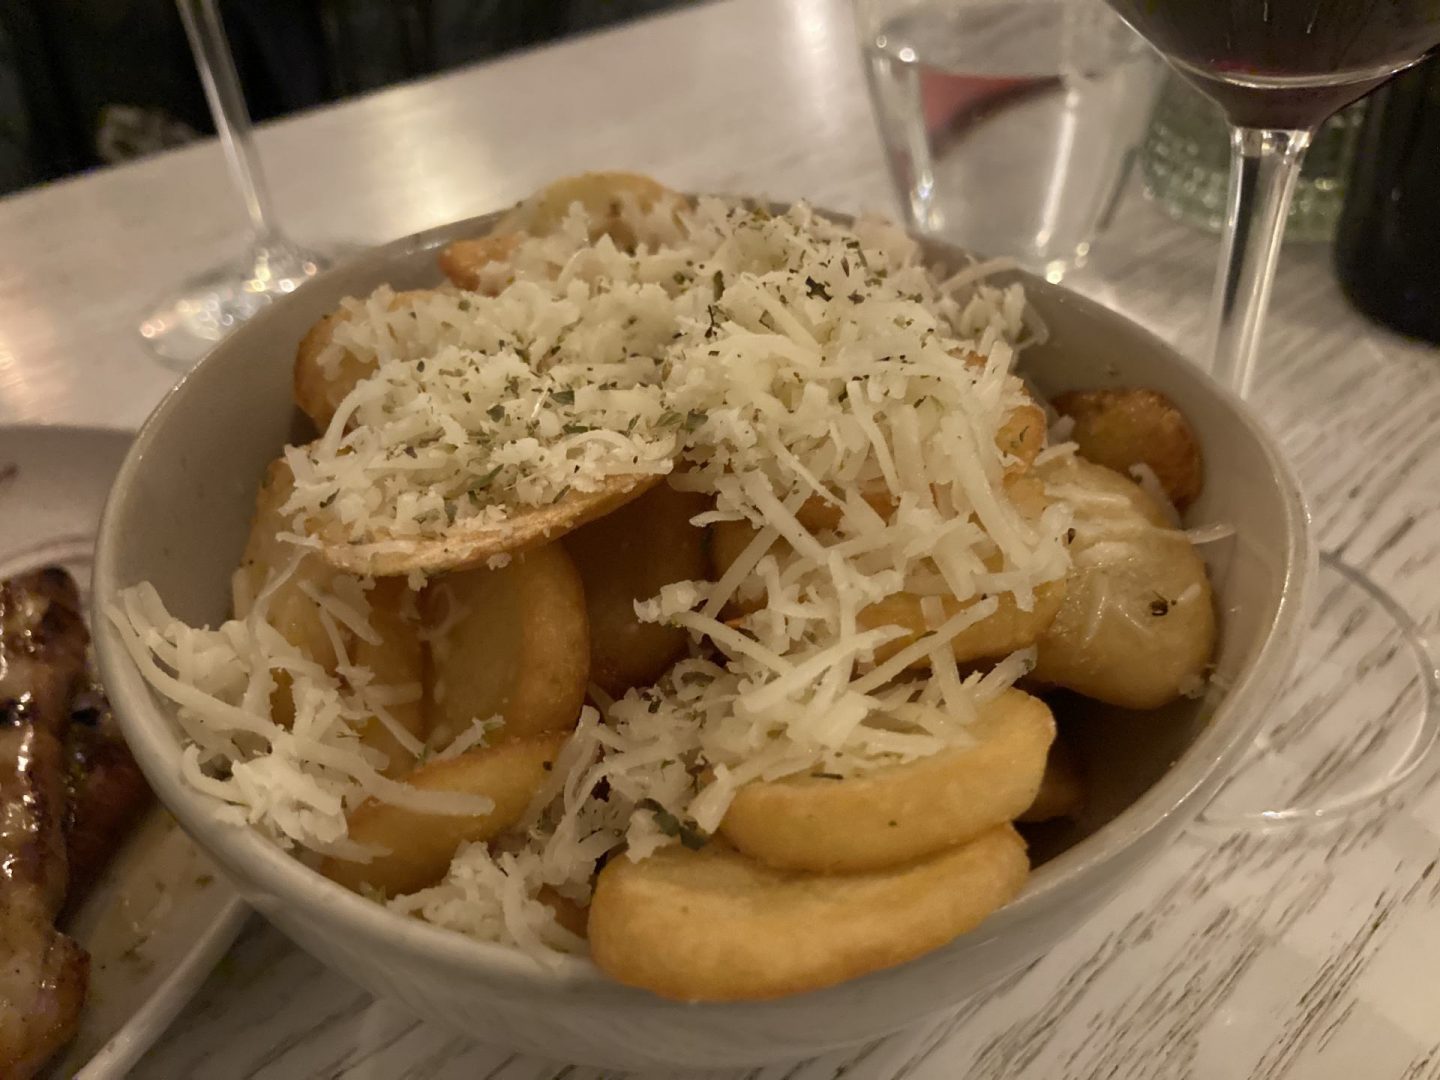 Erfahrung Bewertung Kritik Yamas Bochum Meze frittierte Kartoffeln mit Käse Foodblog Sternestulle